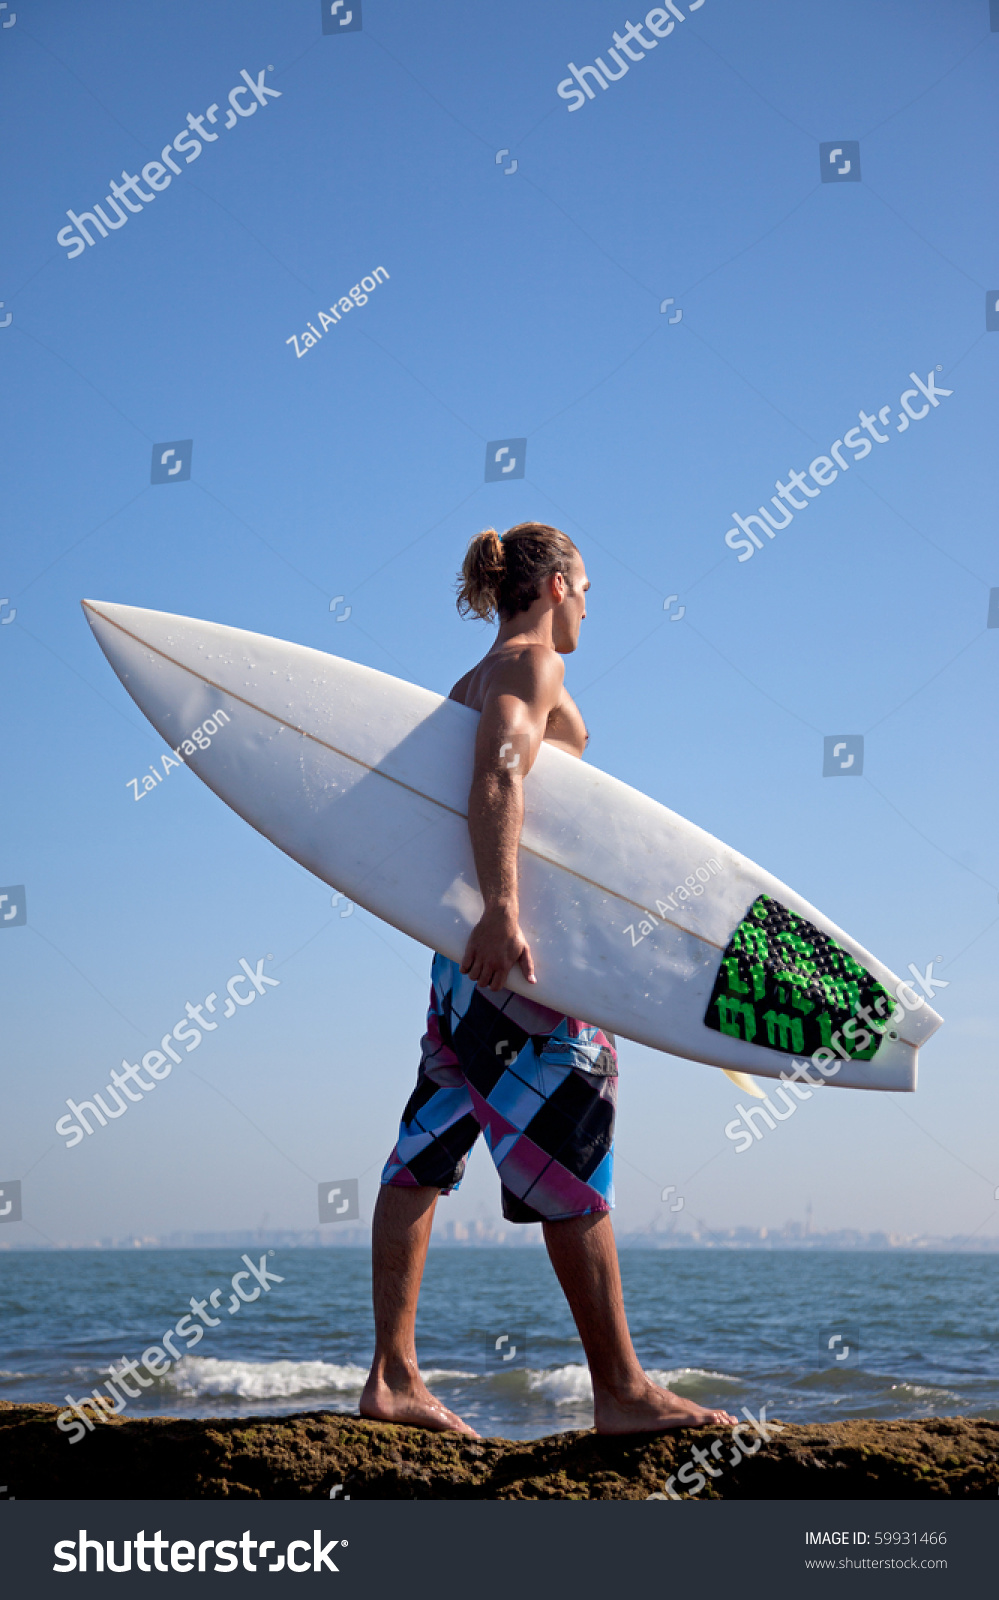 Surfer Holding His Board Walking On Stock Photo 59931466 - Shutterstock